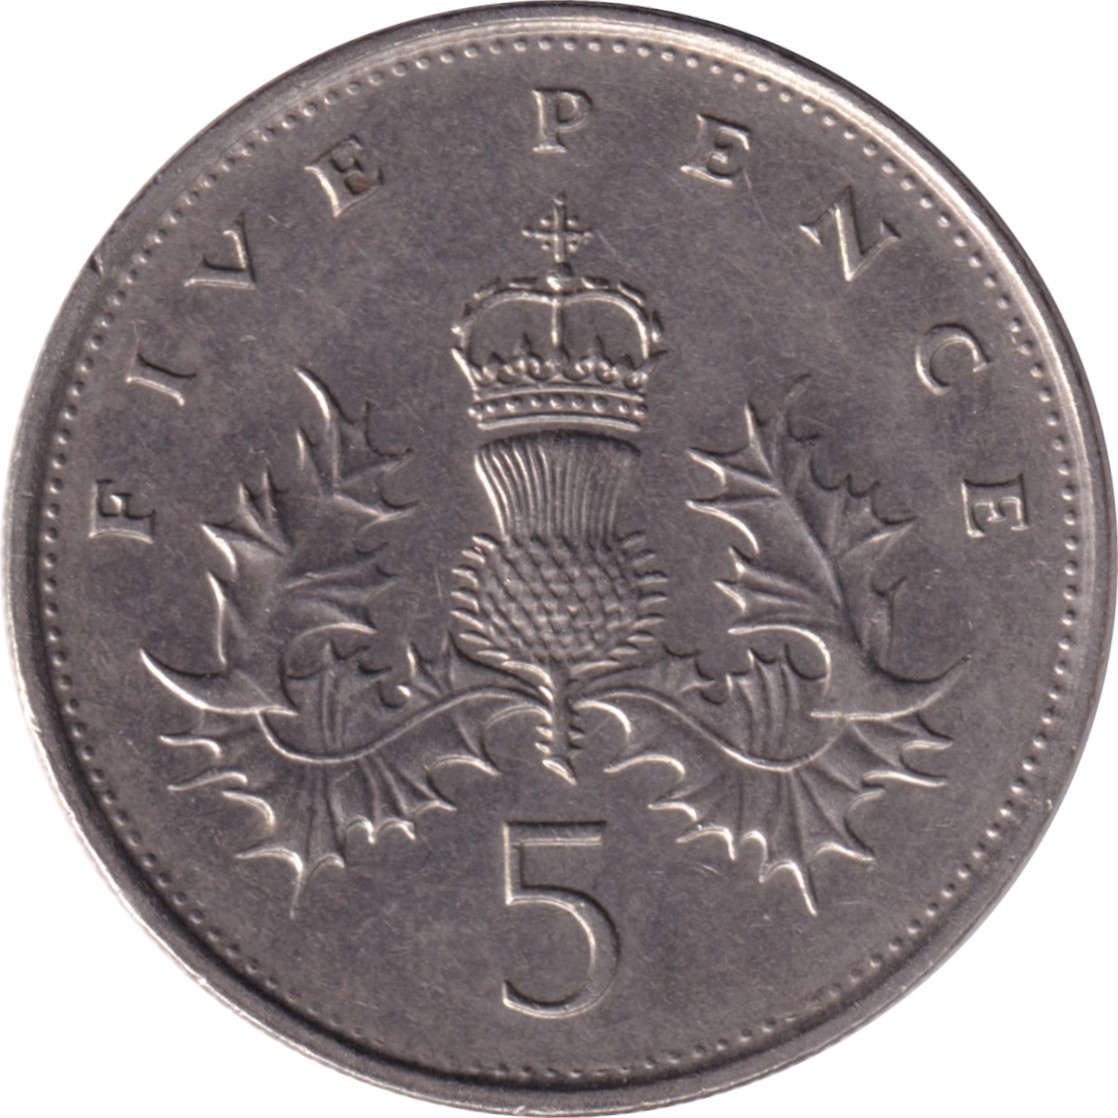 5 pence - Elizabeth II - Tête mature - Grand module